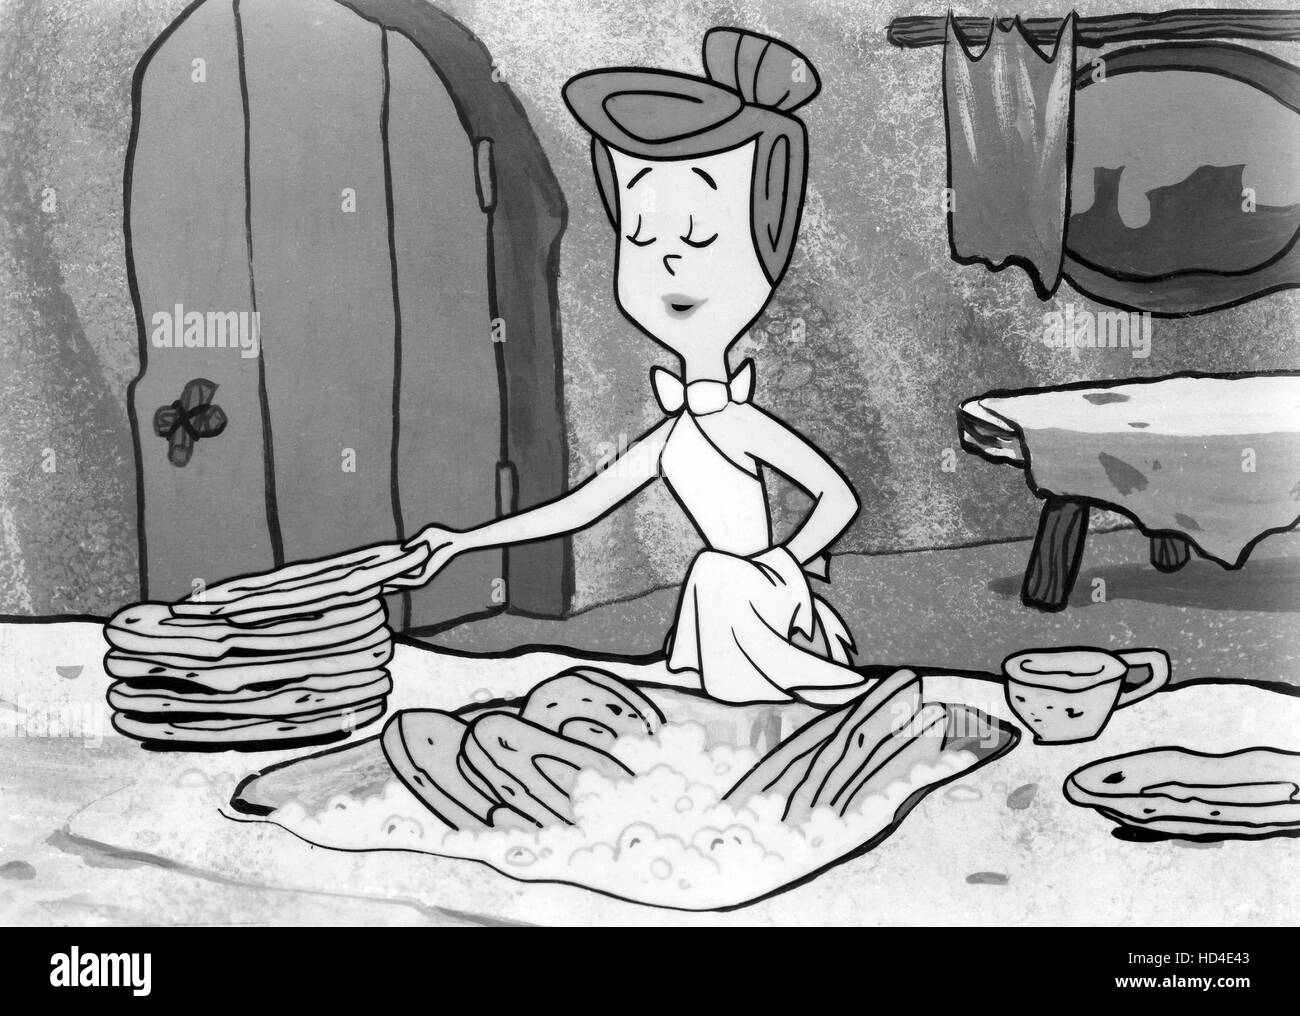 THE FLINTSTONES, Wilma Flintstone, 1960-66 Stock Photo image